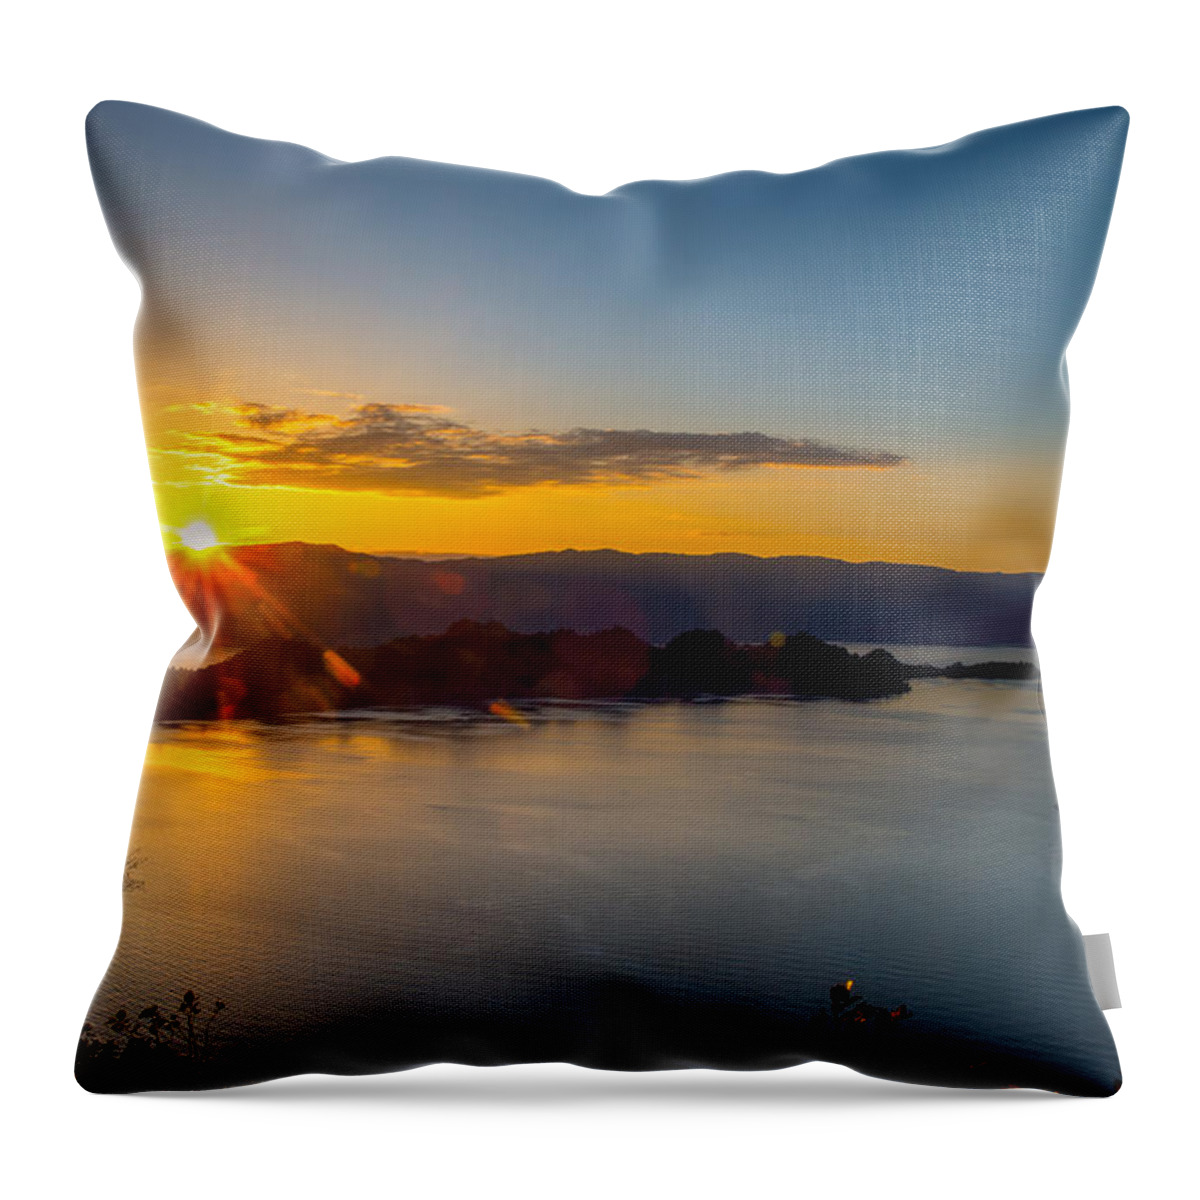 Lake Towada Throw Pillow featuring the photograph Sunset at Lake Towada by Hisao Mogi